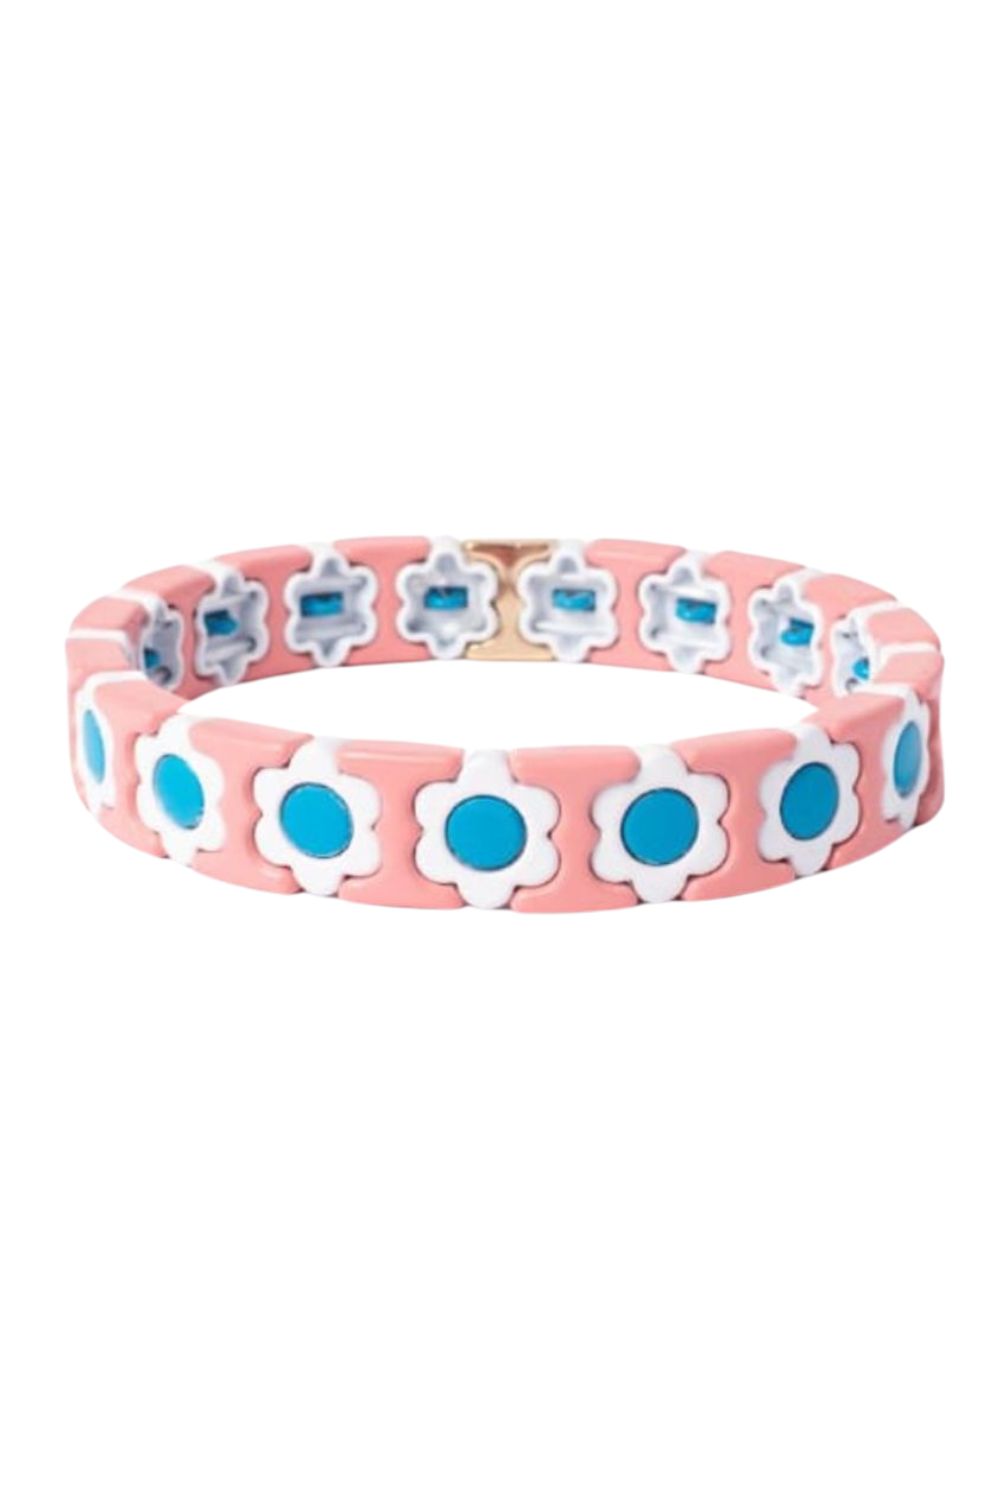 Daisy chain bracelet - pink/white/blue